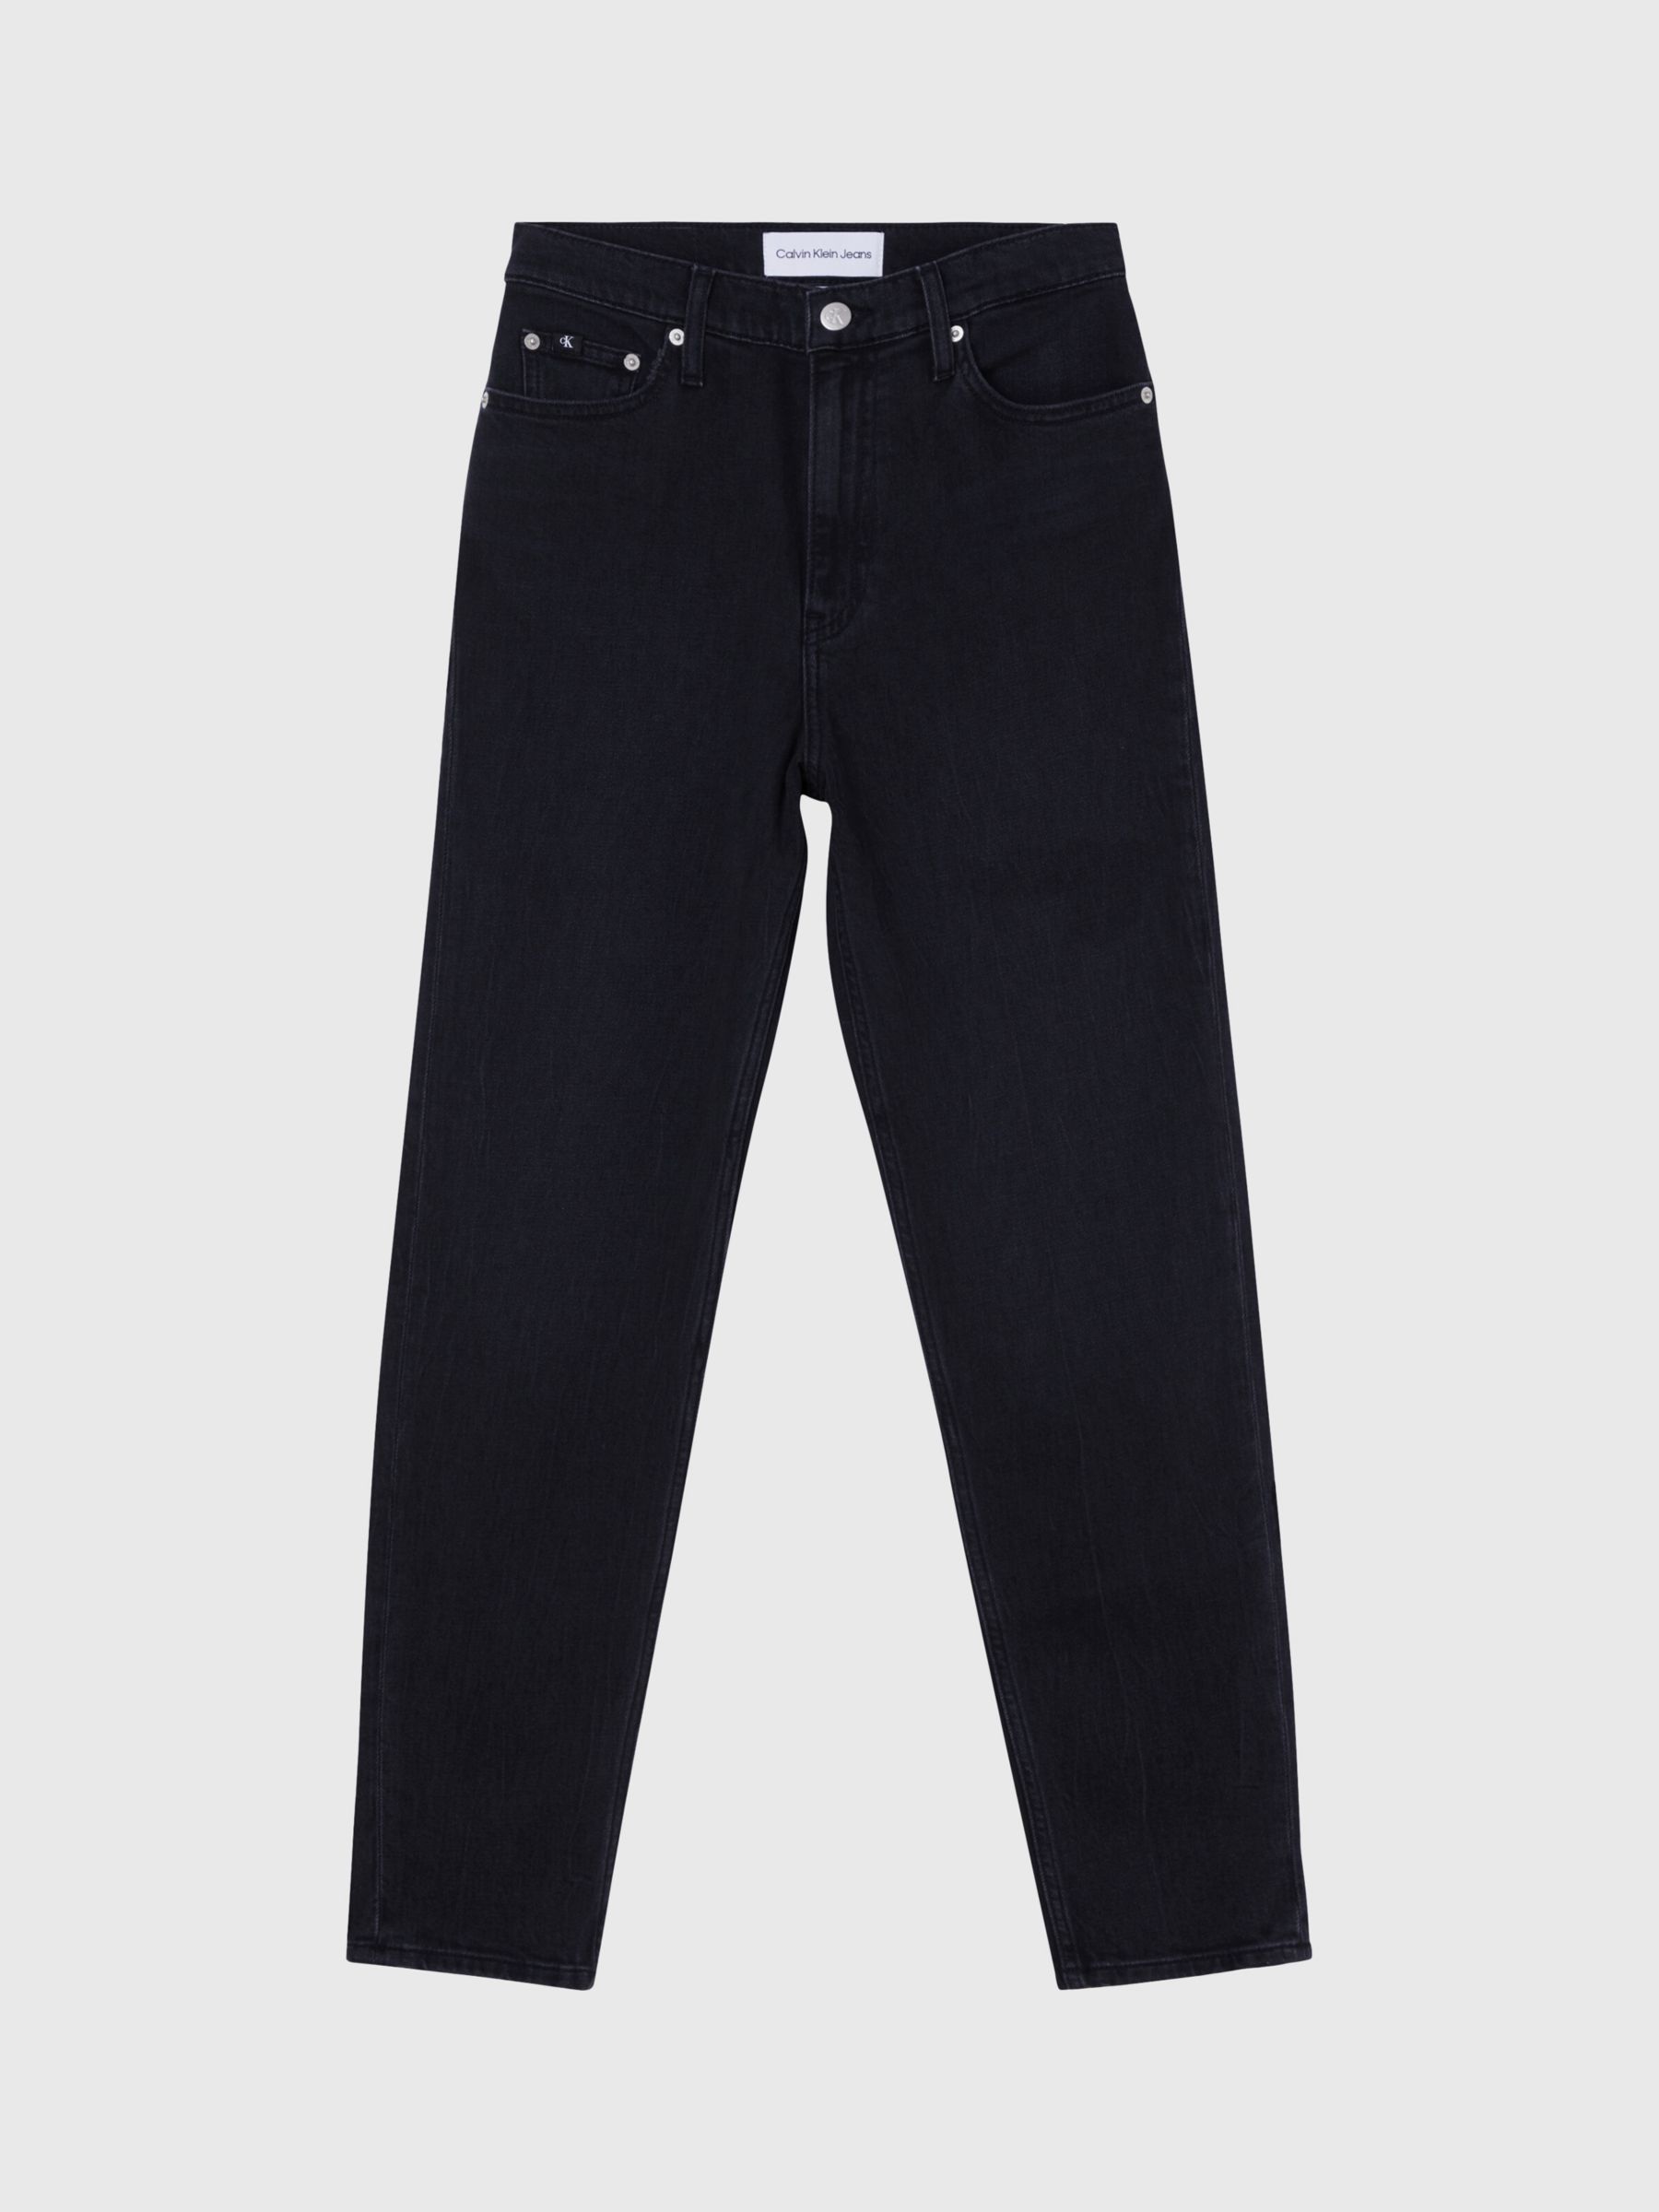 Calvin Klein Plain Mom Jeans, Denim Black, 25